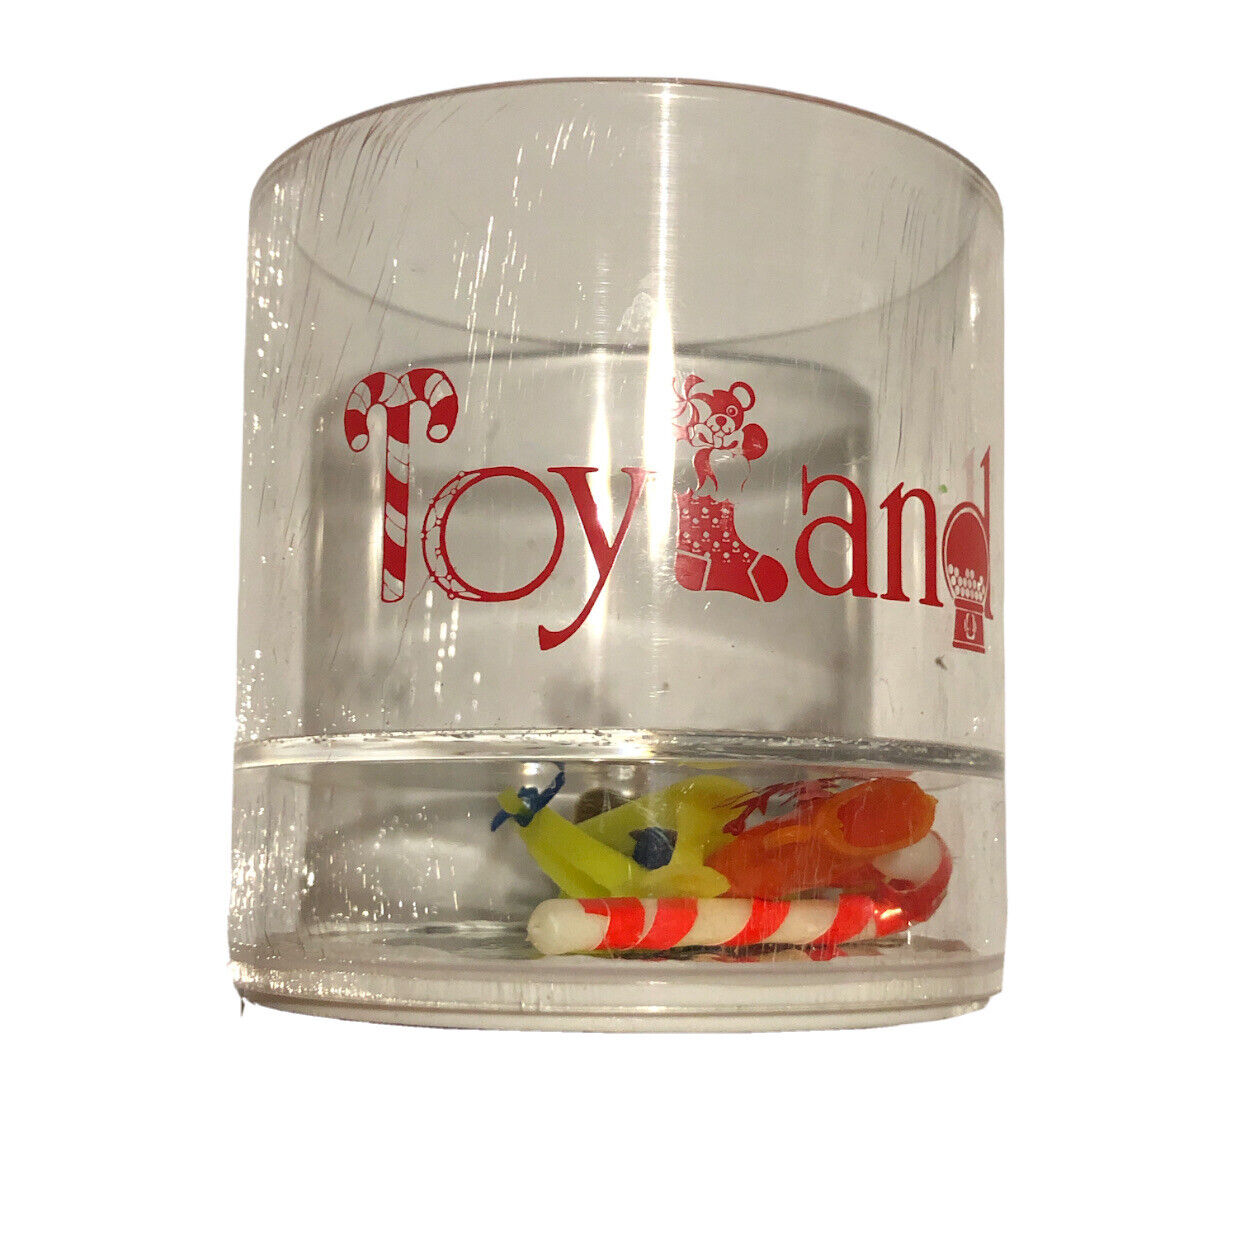 Vintage Howw Novelty Toy Land Game Cocktail Plastic Rocks Glass Cup